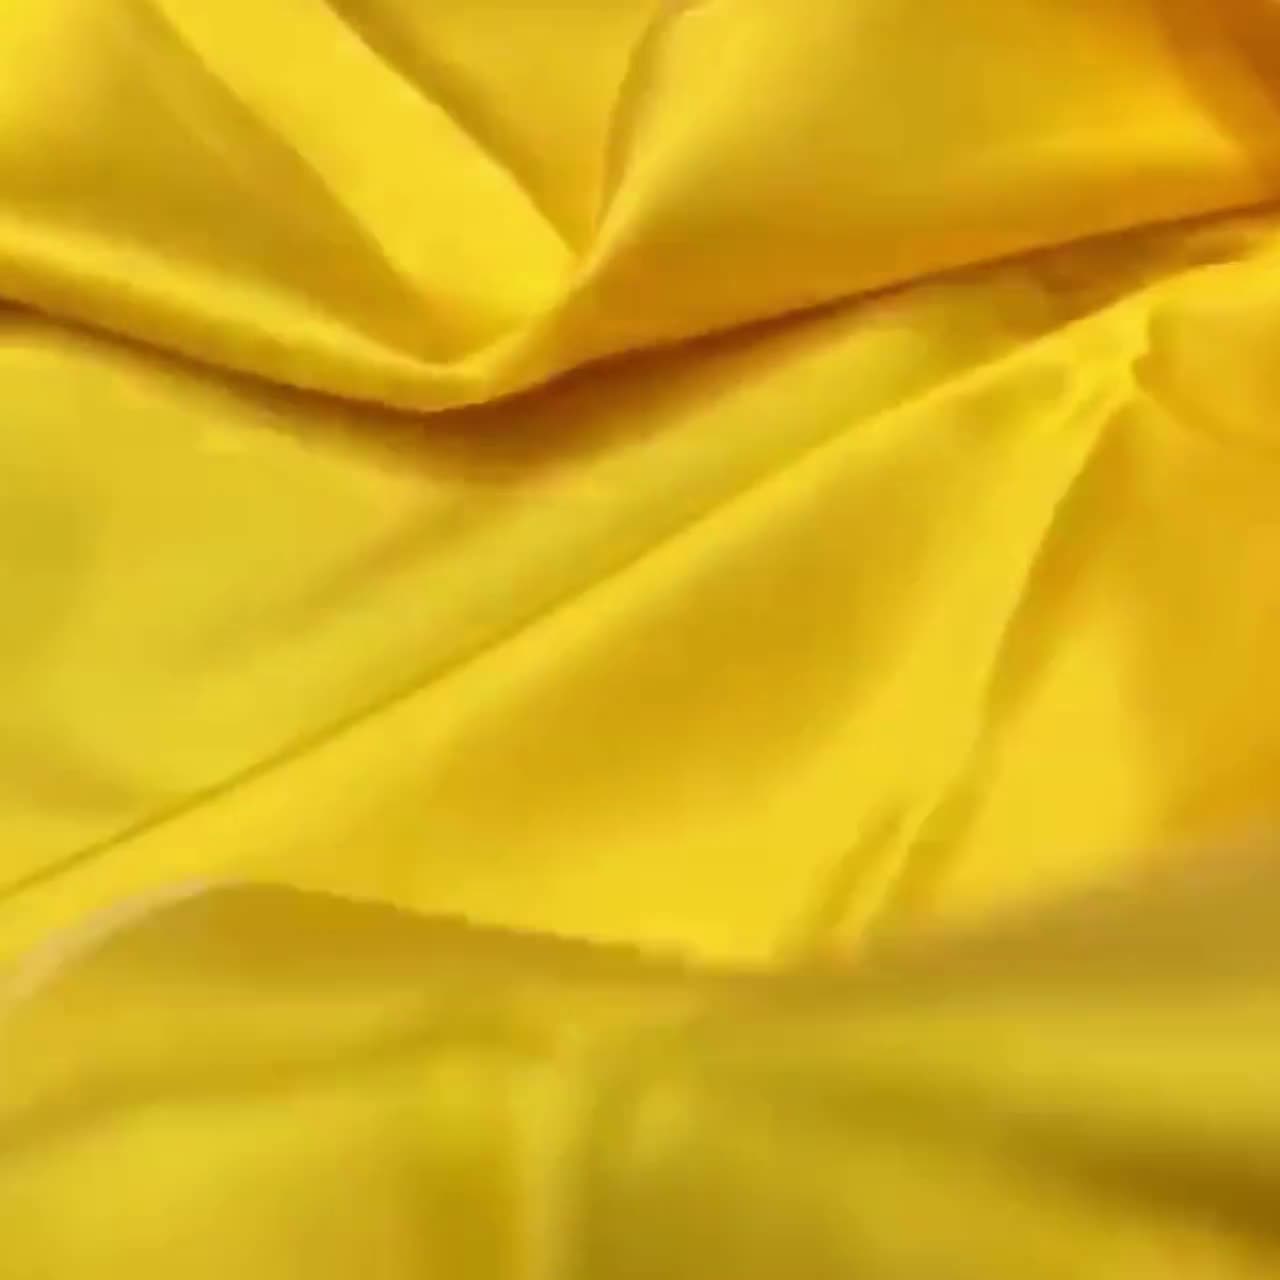 PURE MULBERRY SILK Fabric by the Yard Yellow Satin Fabric Handmade